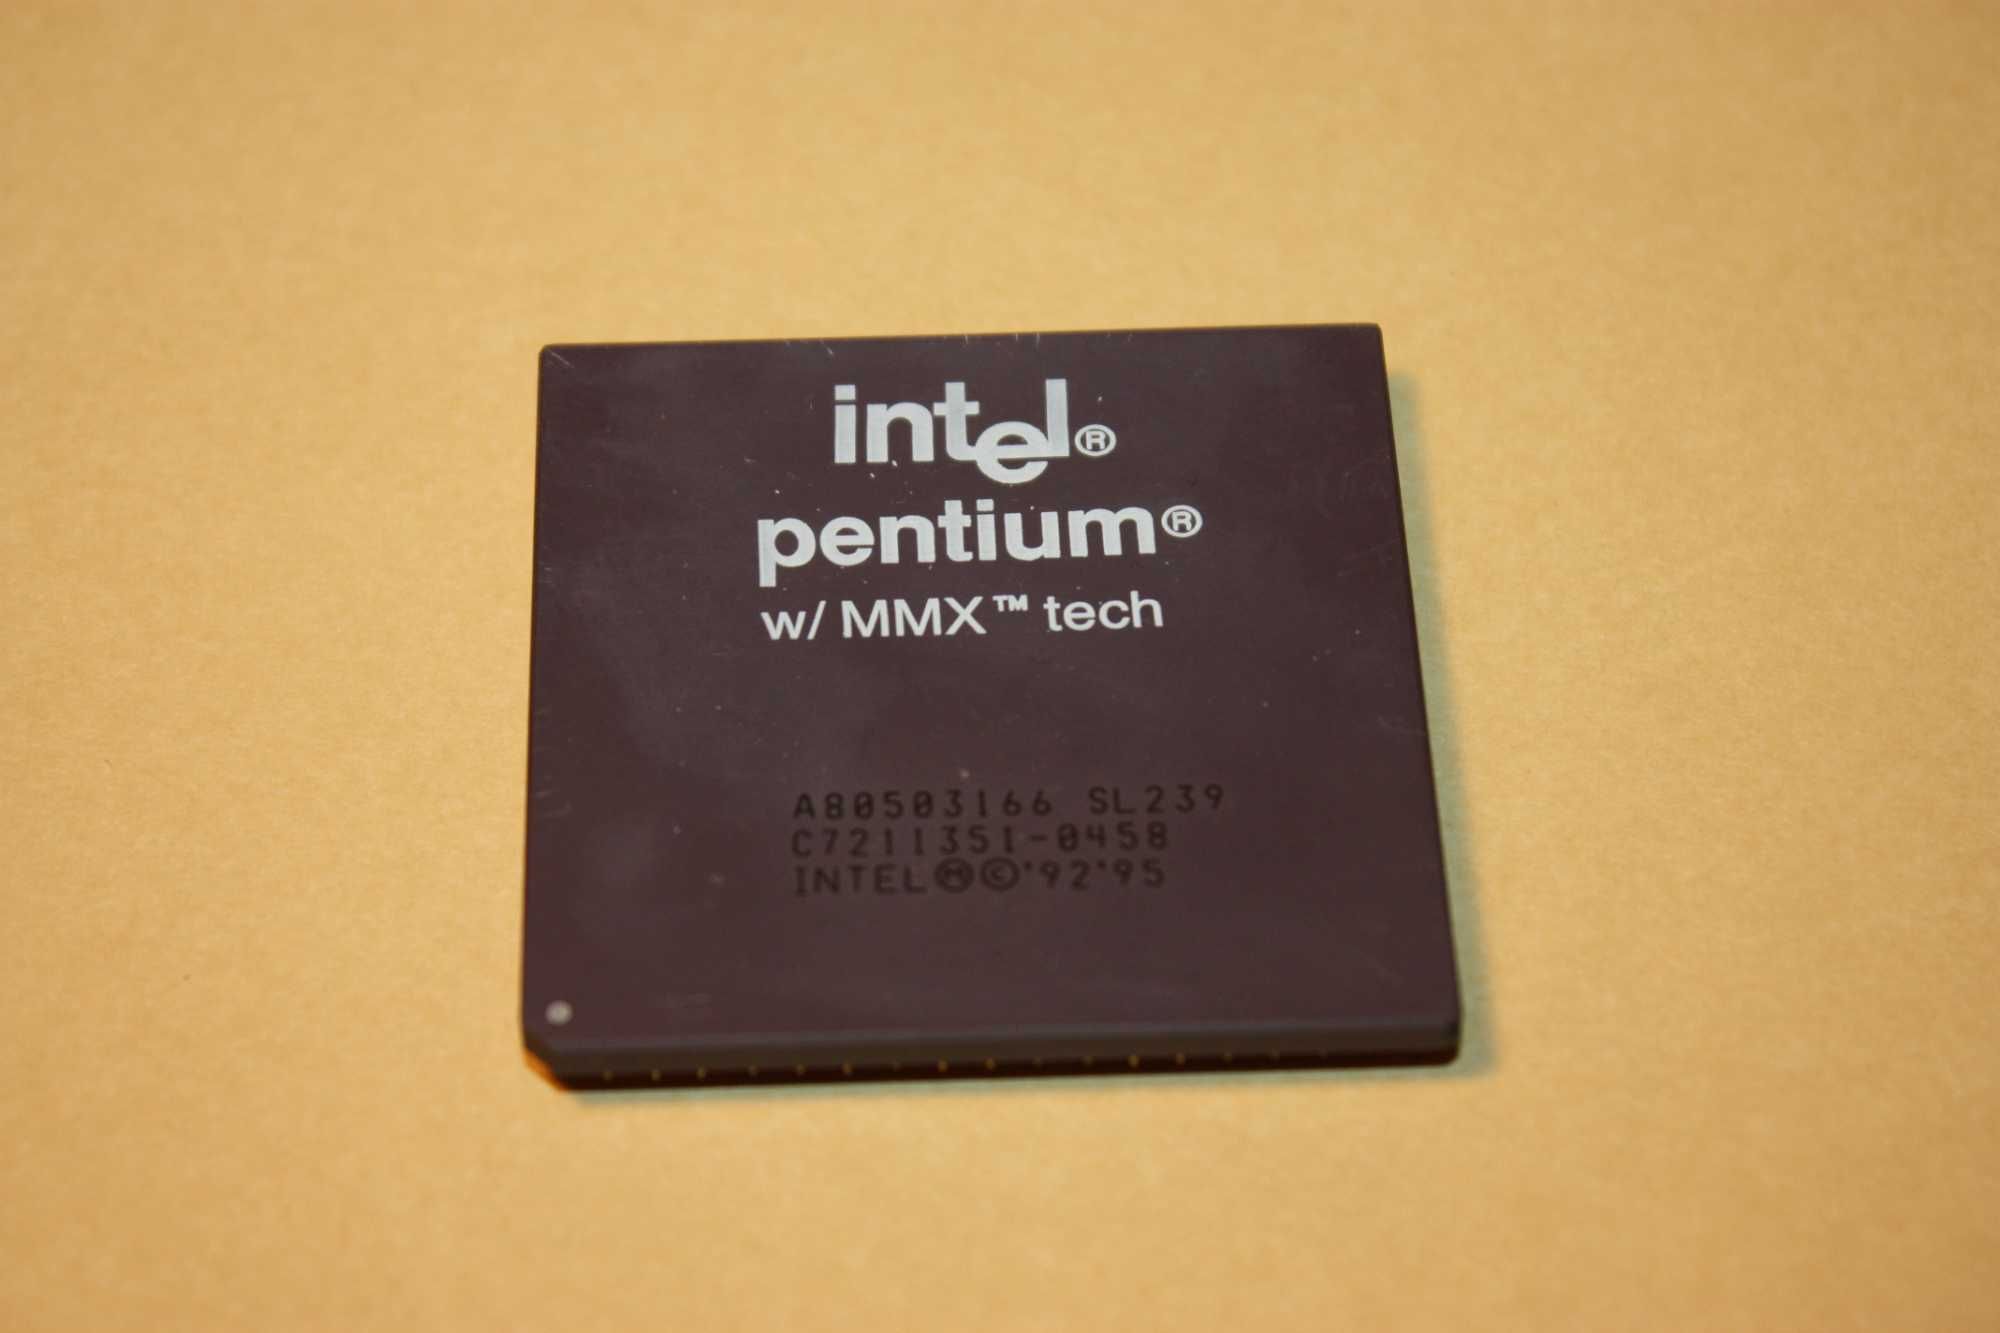 Intel Pentium MMX 166 MHz (A80503166) - Socket 7 (an 1997, retro PC)